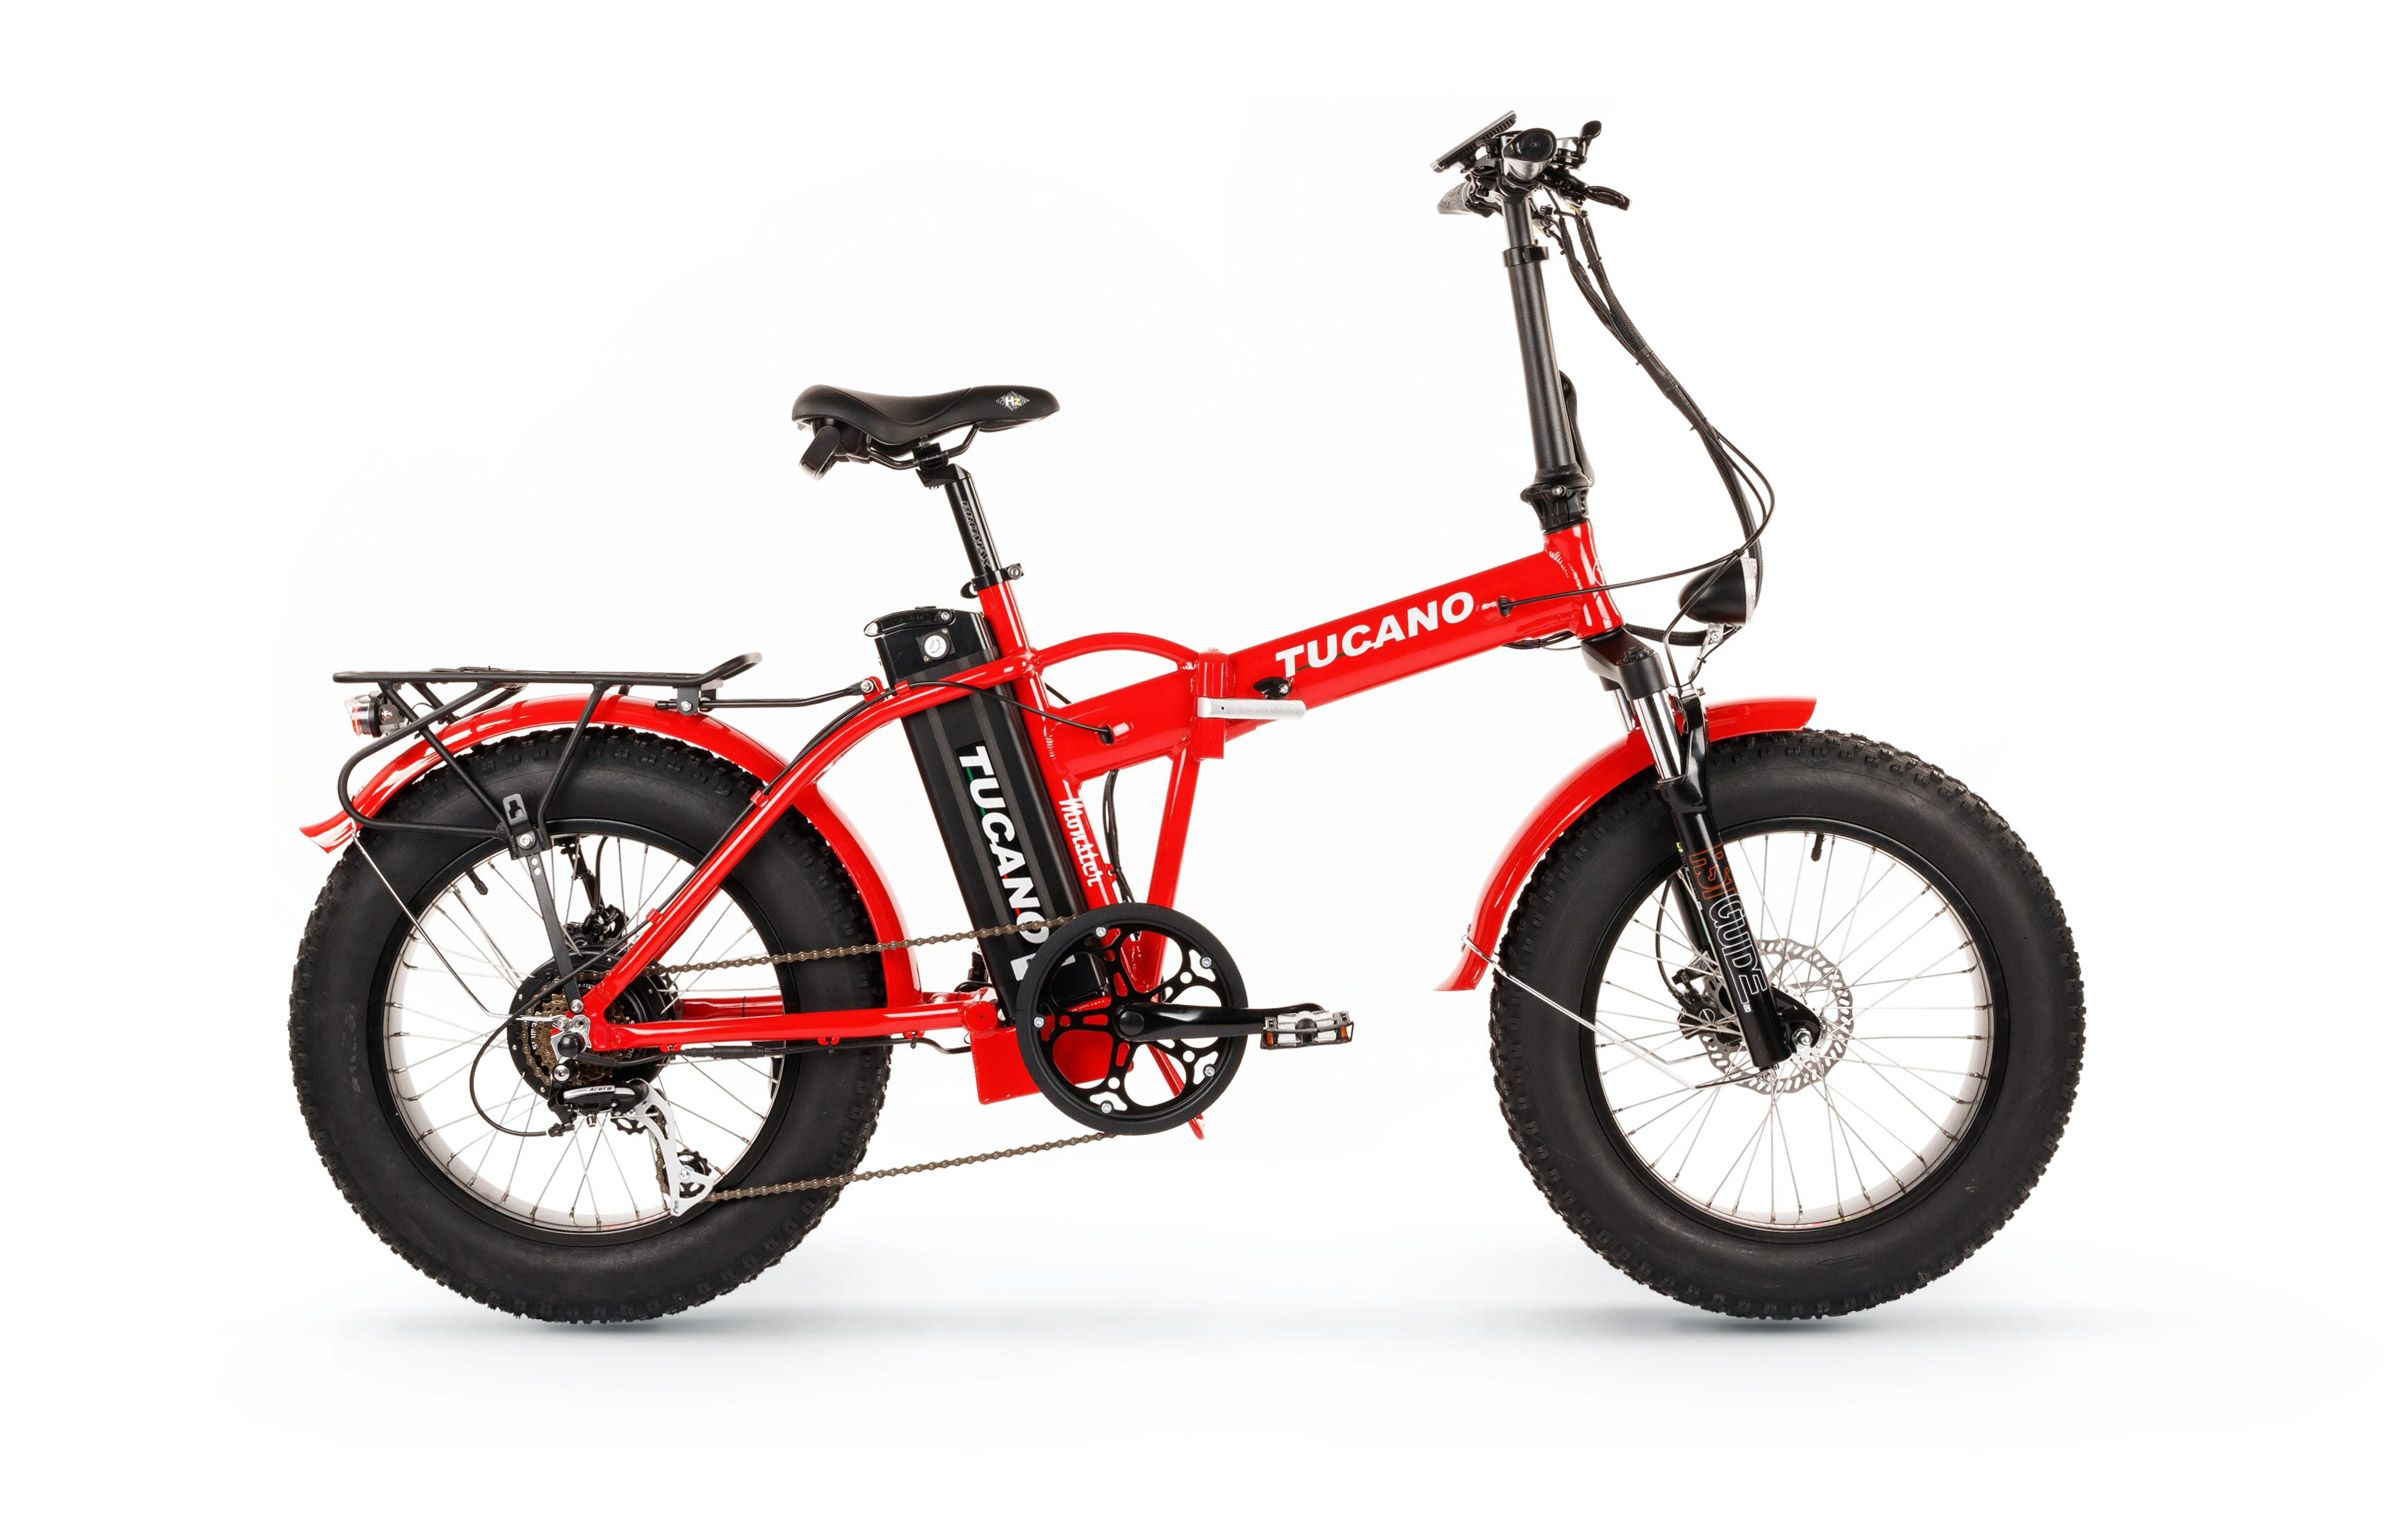 Bicicleta plegable electrica tucano | Bikesporting